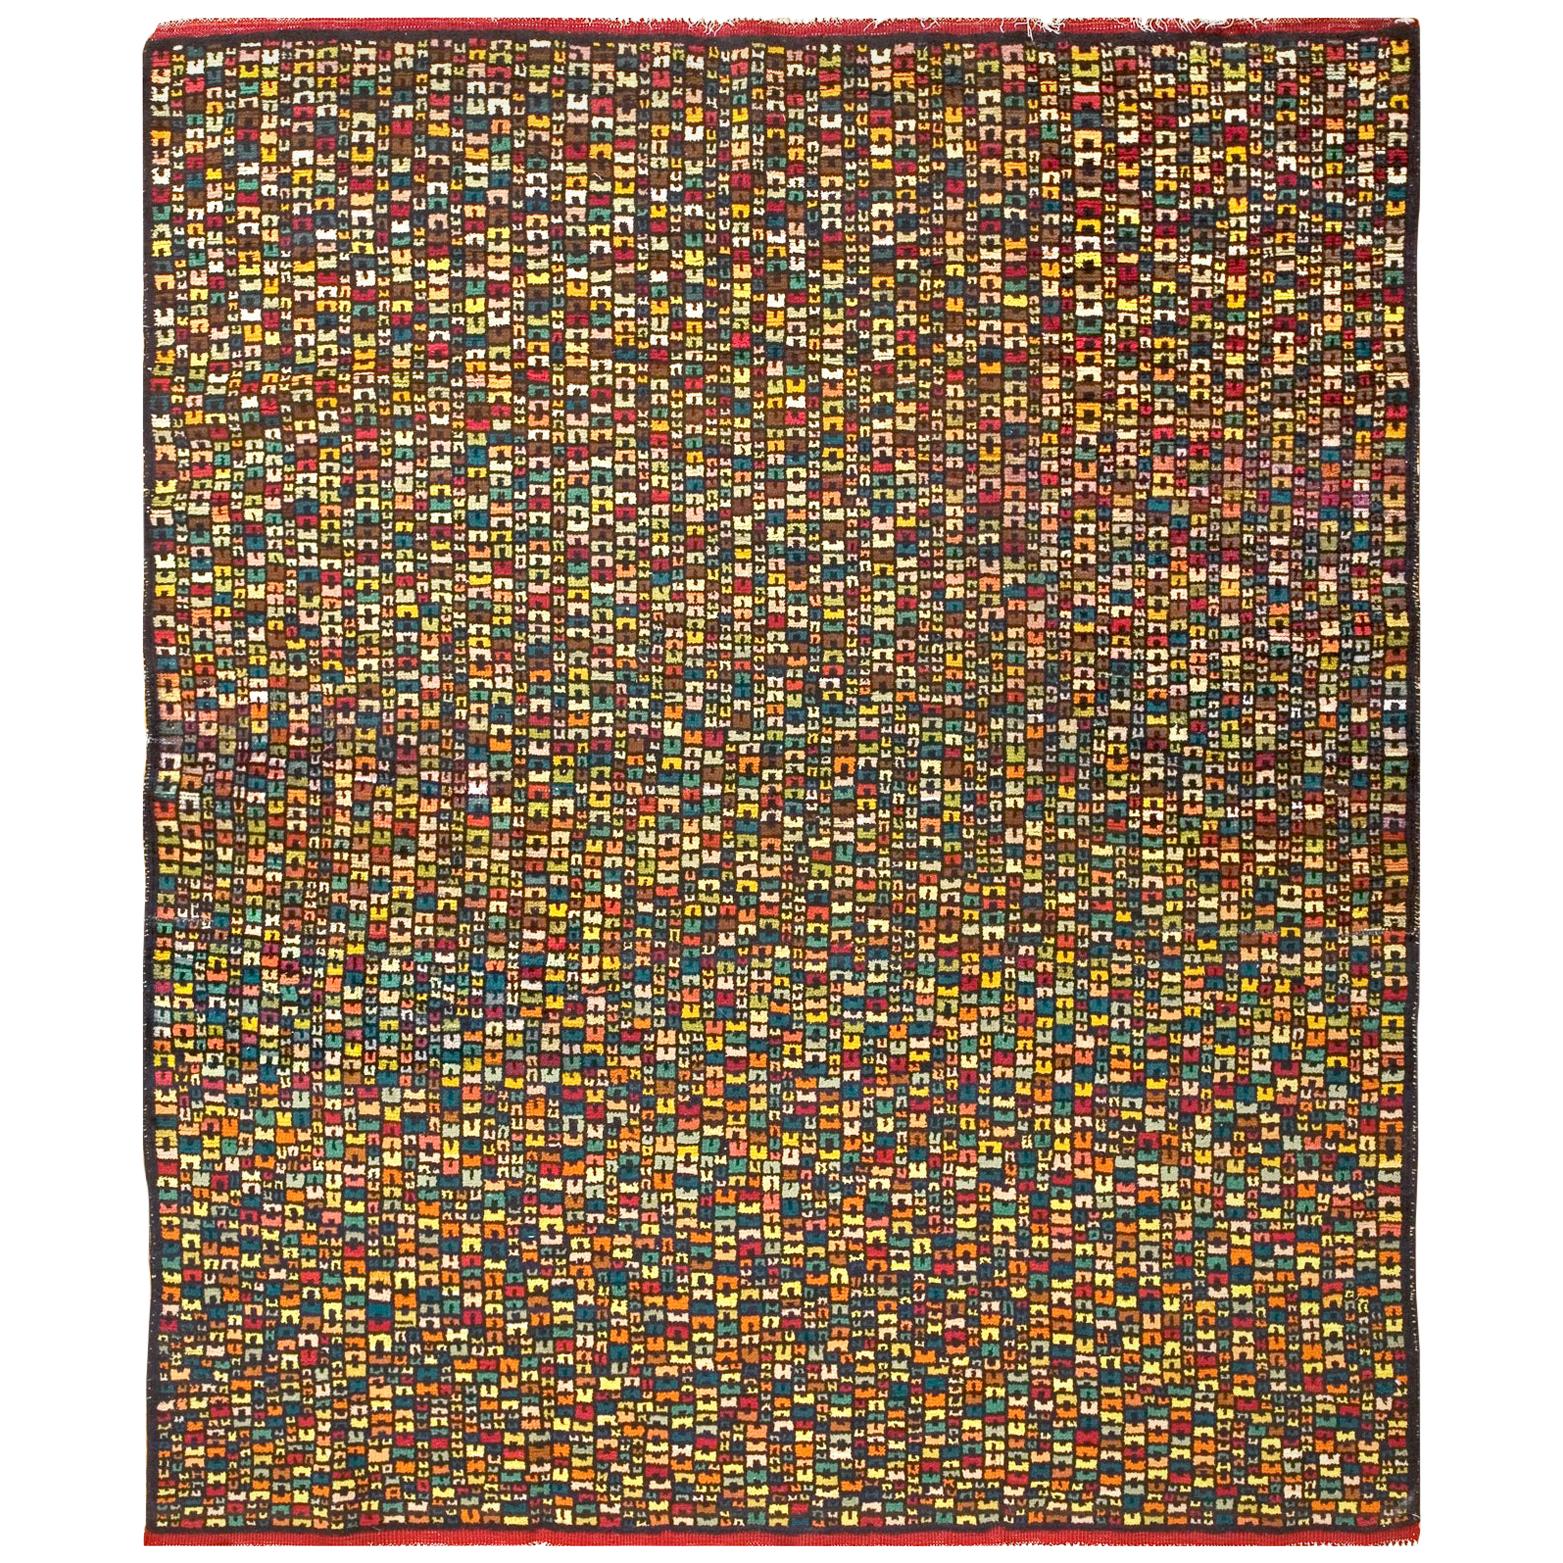 Early 20th Century Jerusalem Carpet in Bauhaus Style ( 5'6" x 6'8" - 168 x 203 )